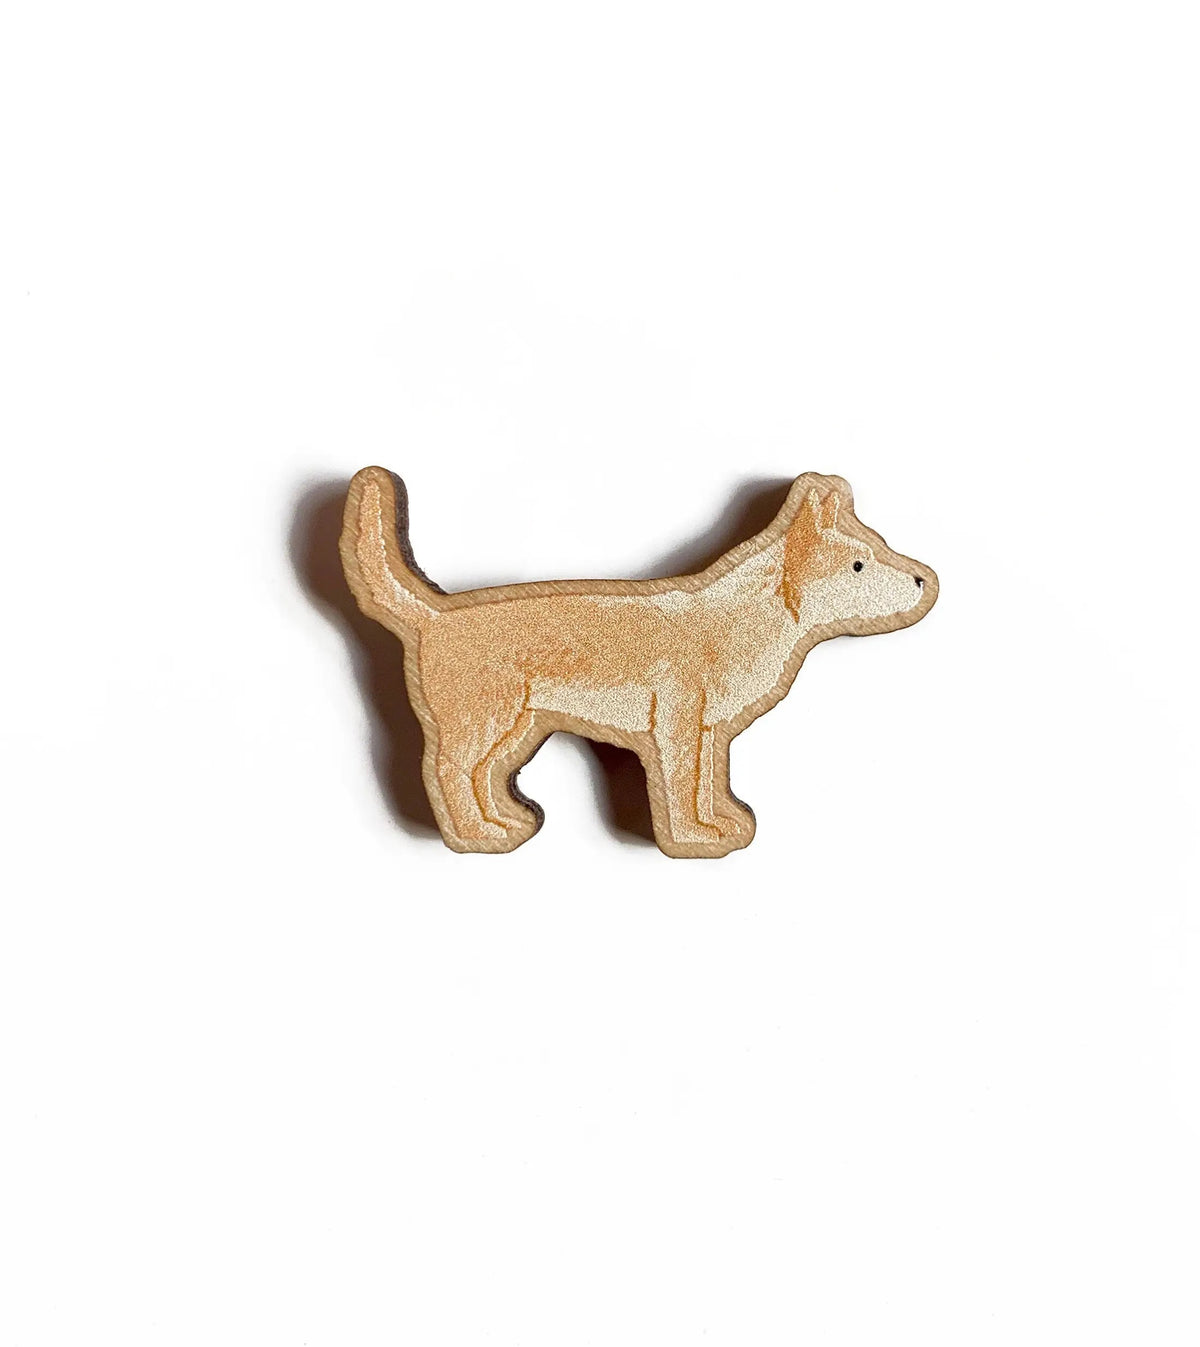 Terrier Wooden Pin